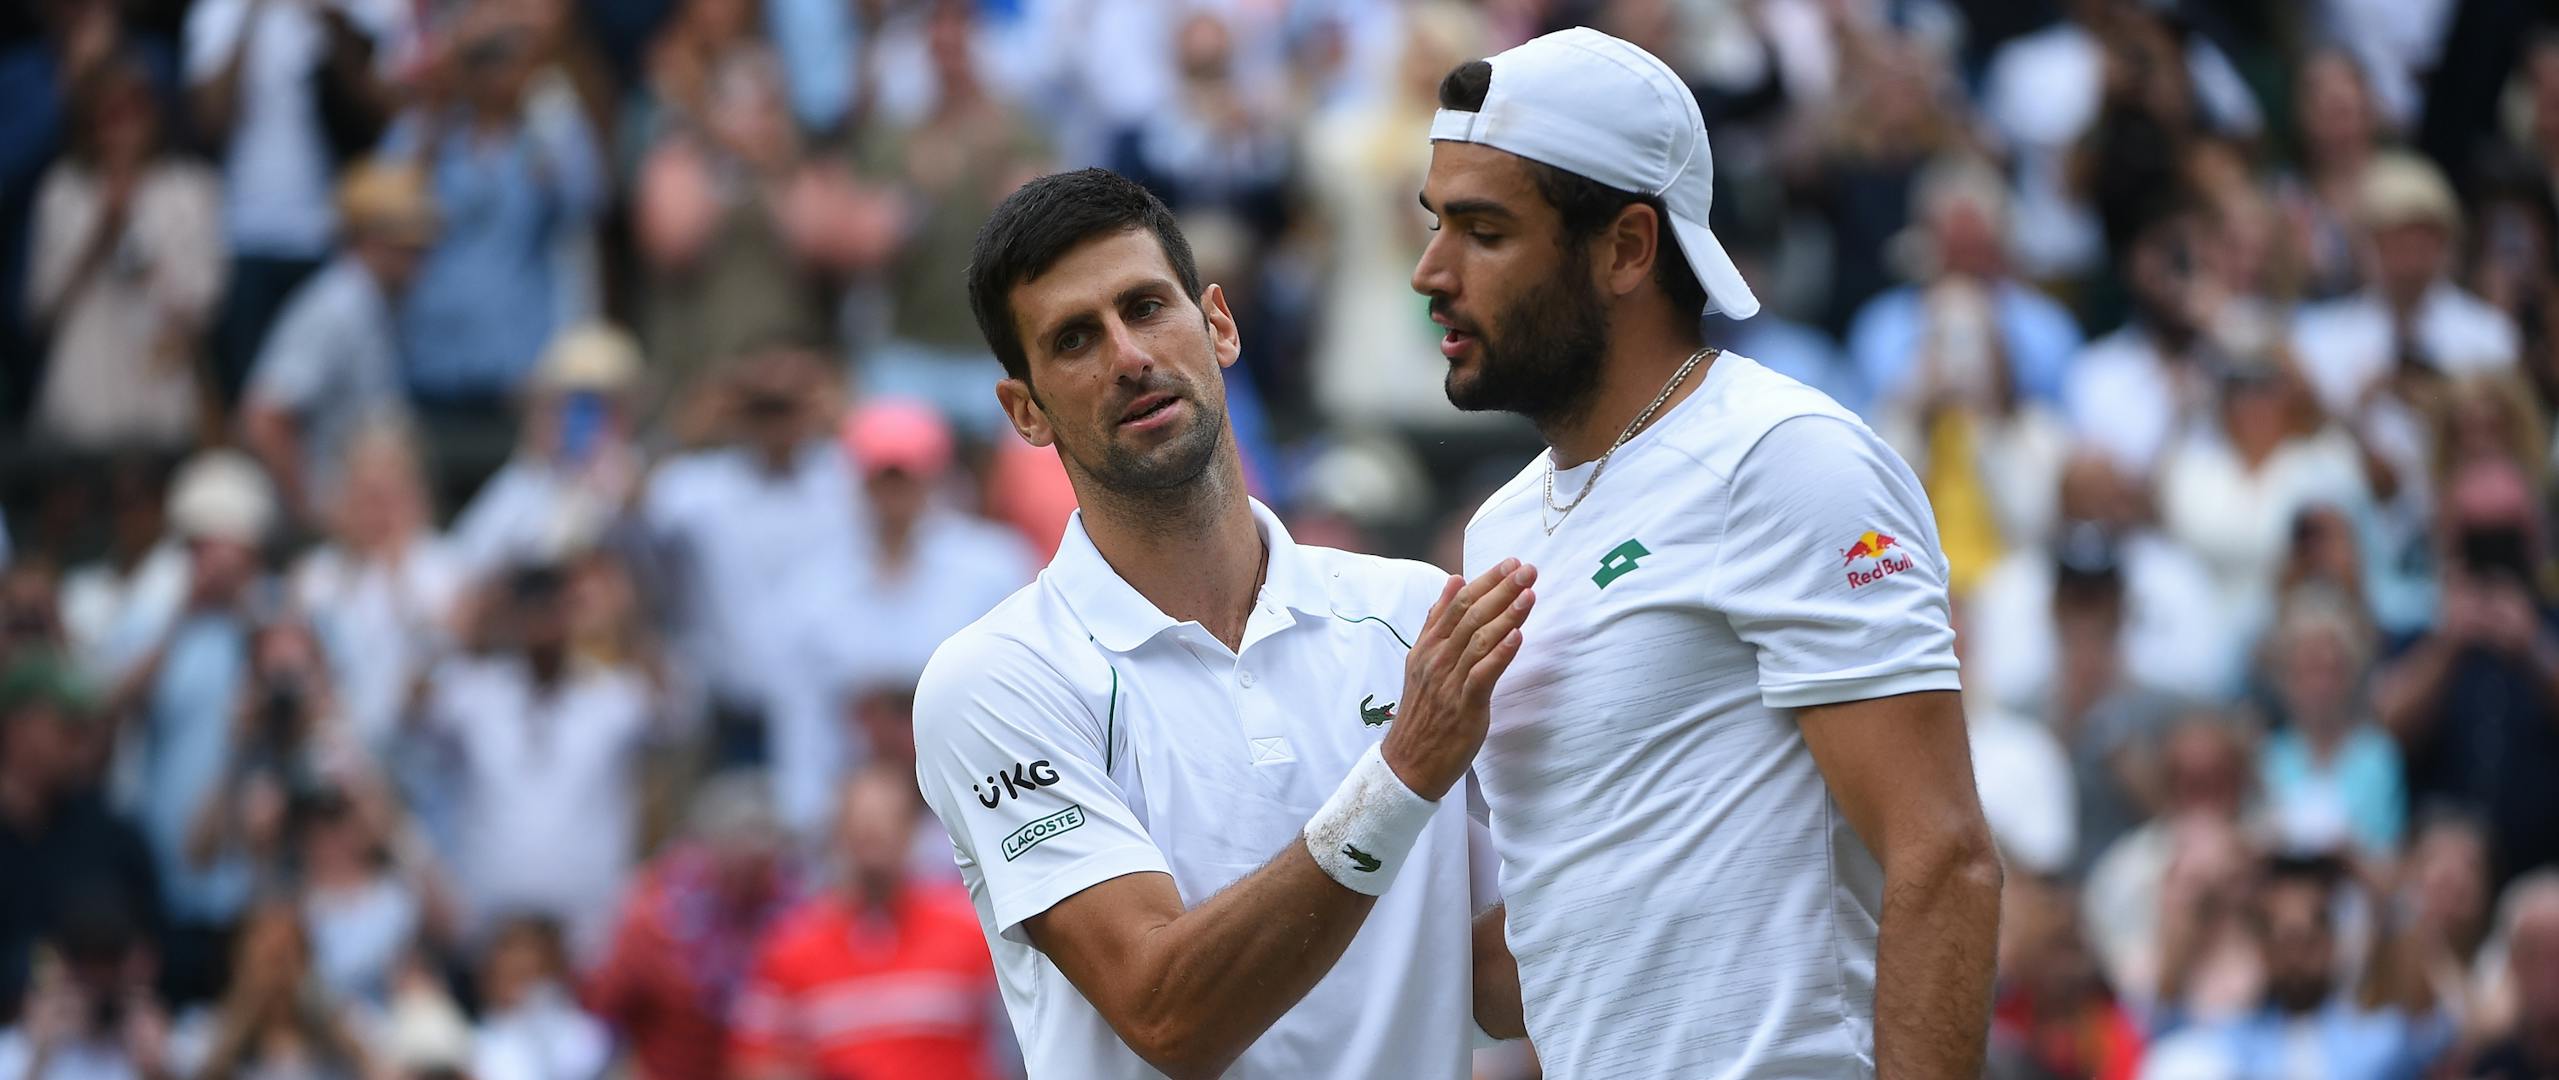 Novak Djokovic & Matteo Berrettini / Wimbledon 2021